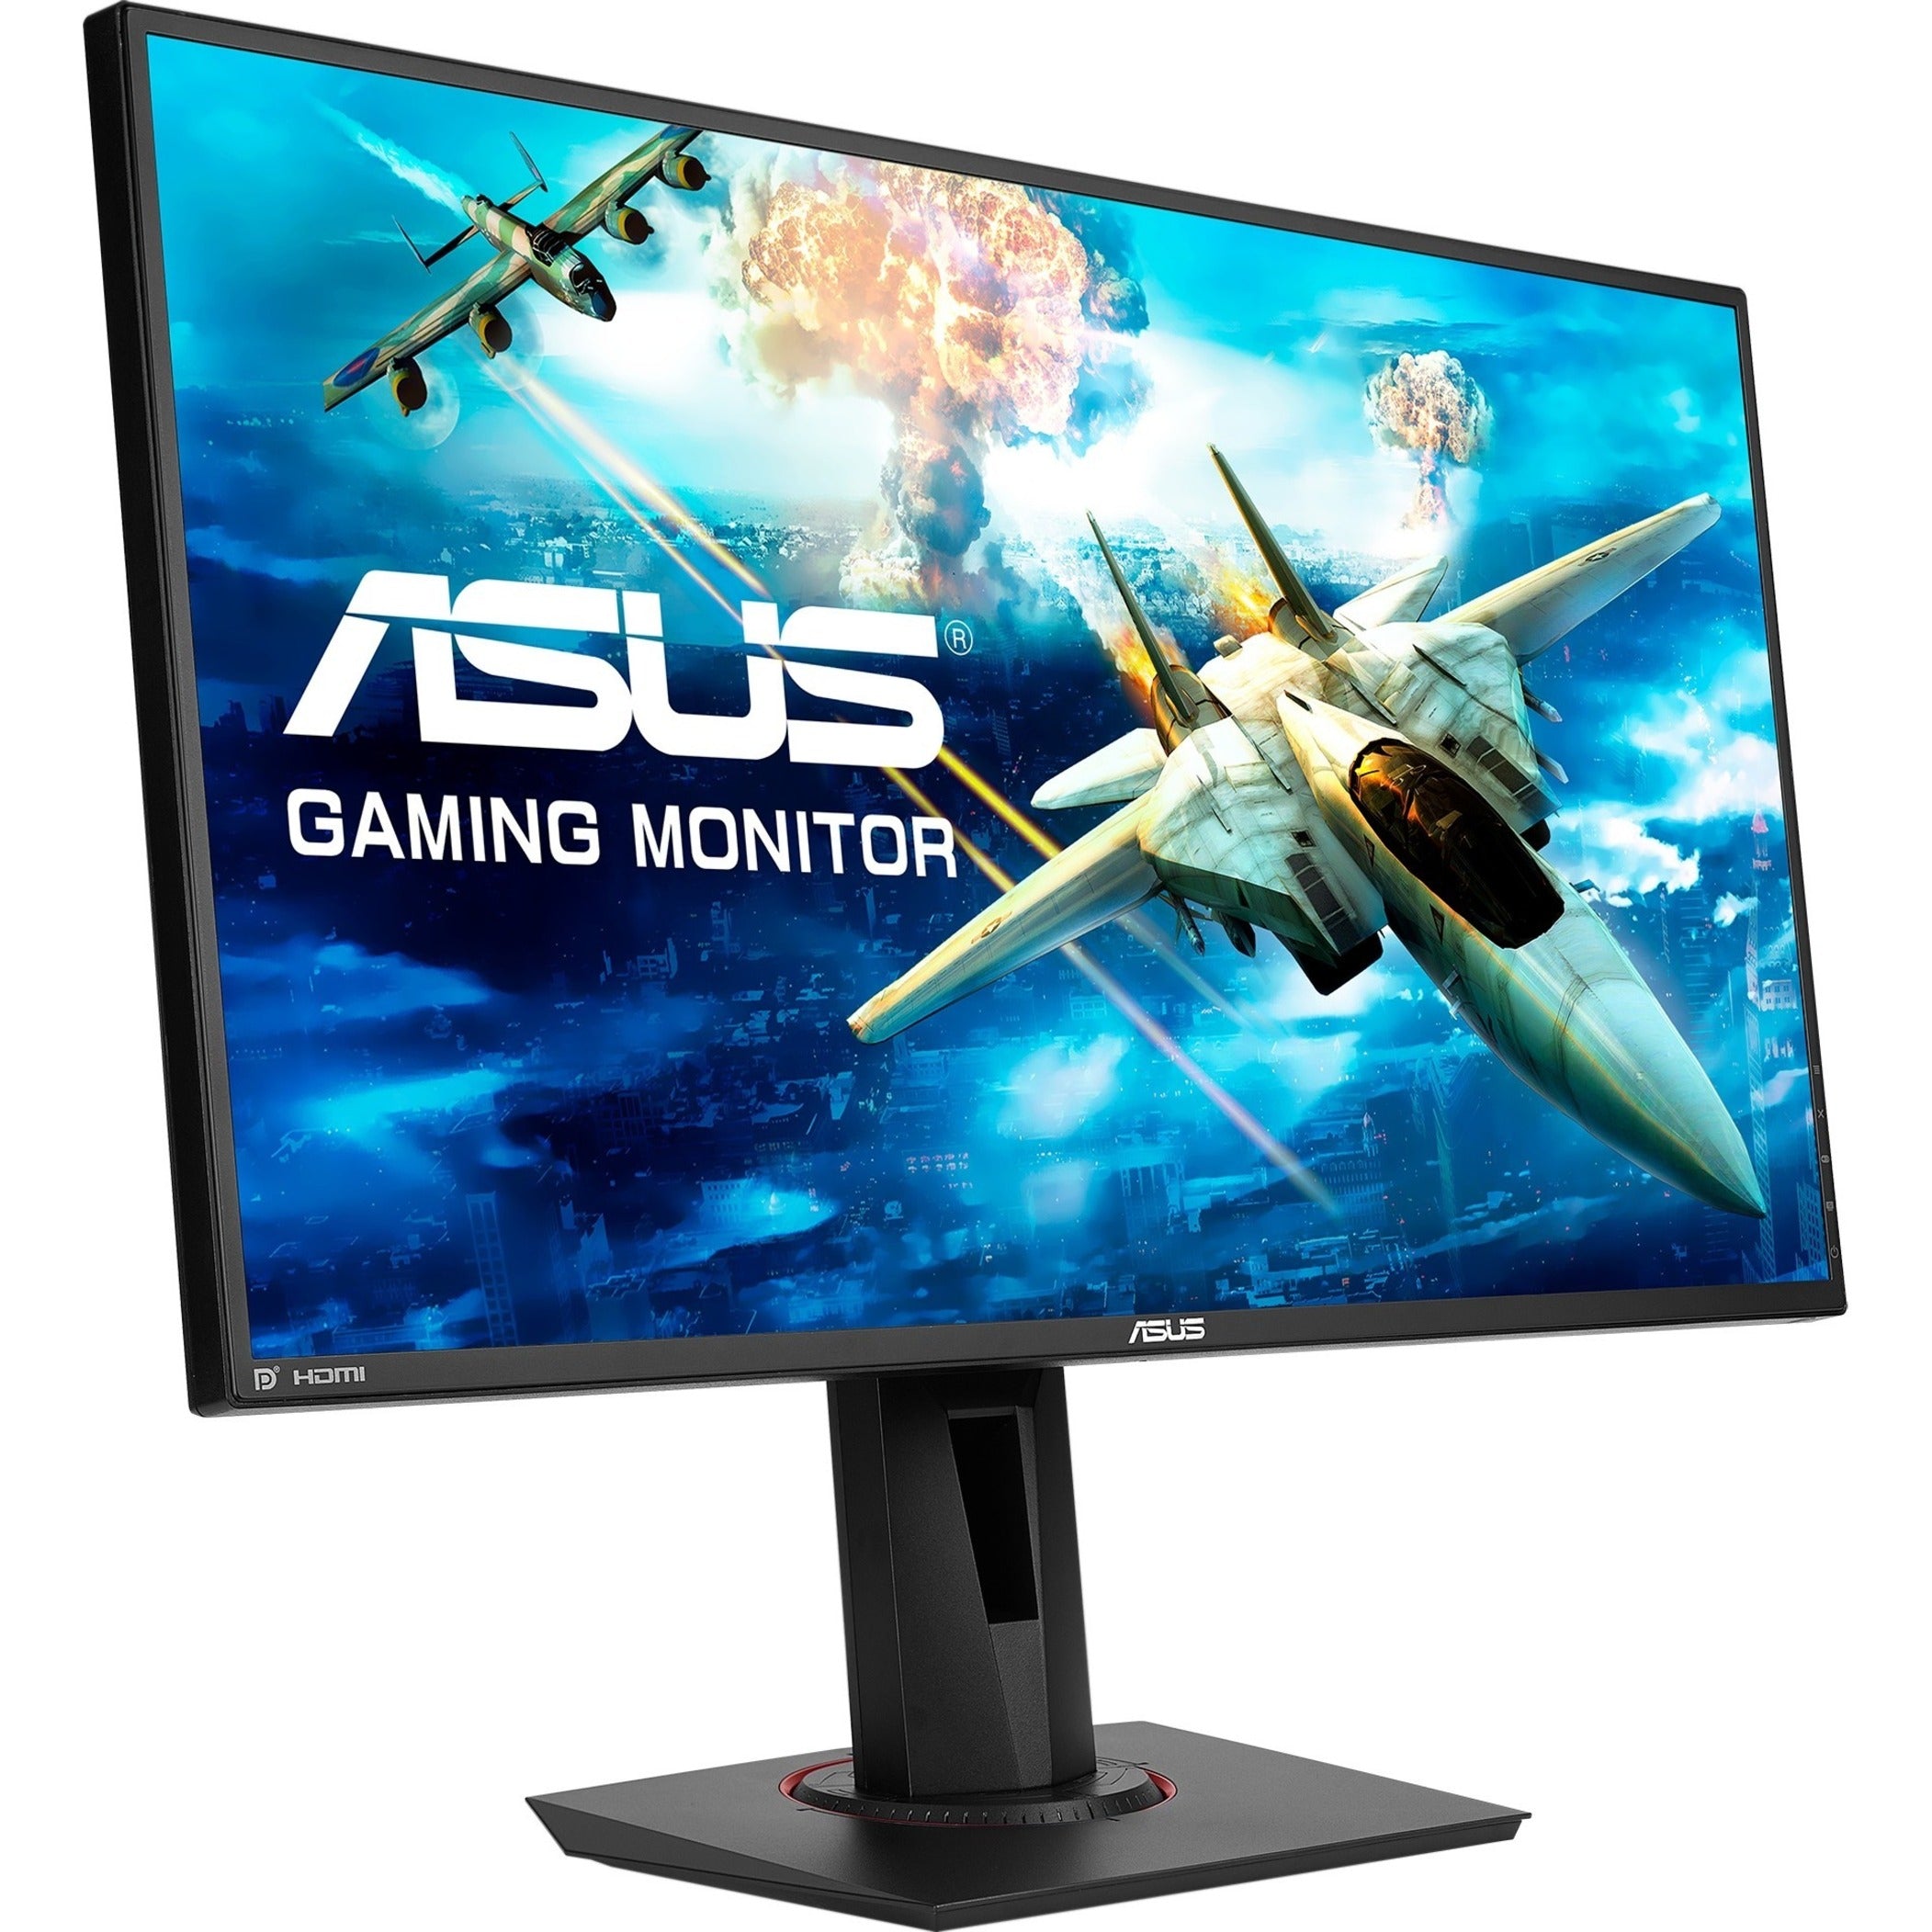 Asus VG278QR Gaming LCD Monitor 27, Full HD, G-sync Compatible, 400 Nit Brightness, 72% NTSC Color Gamut